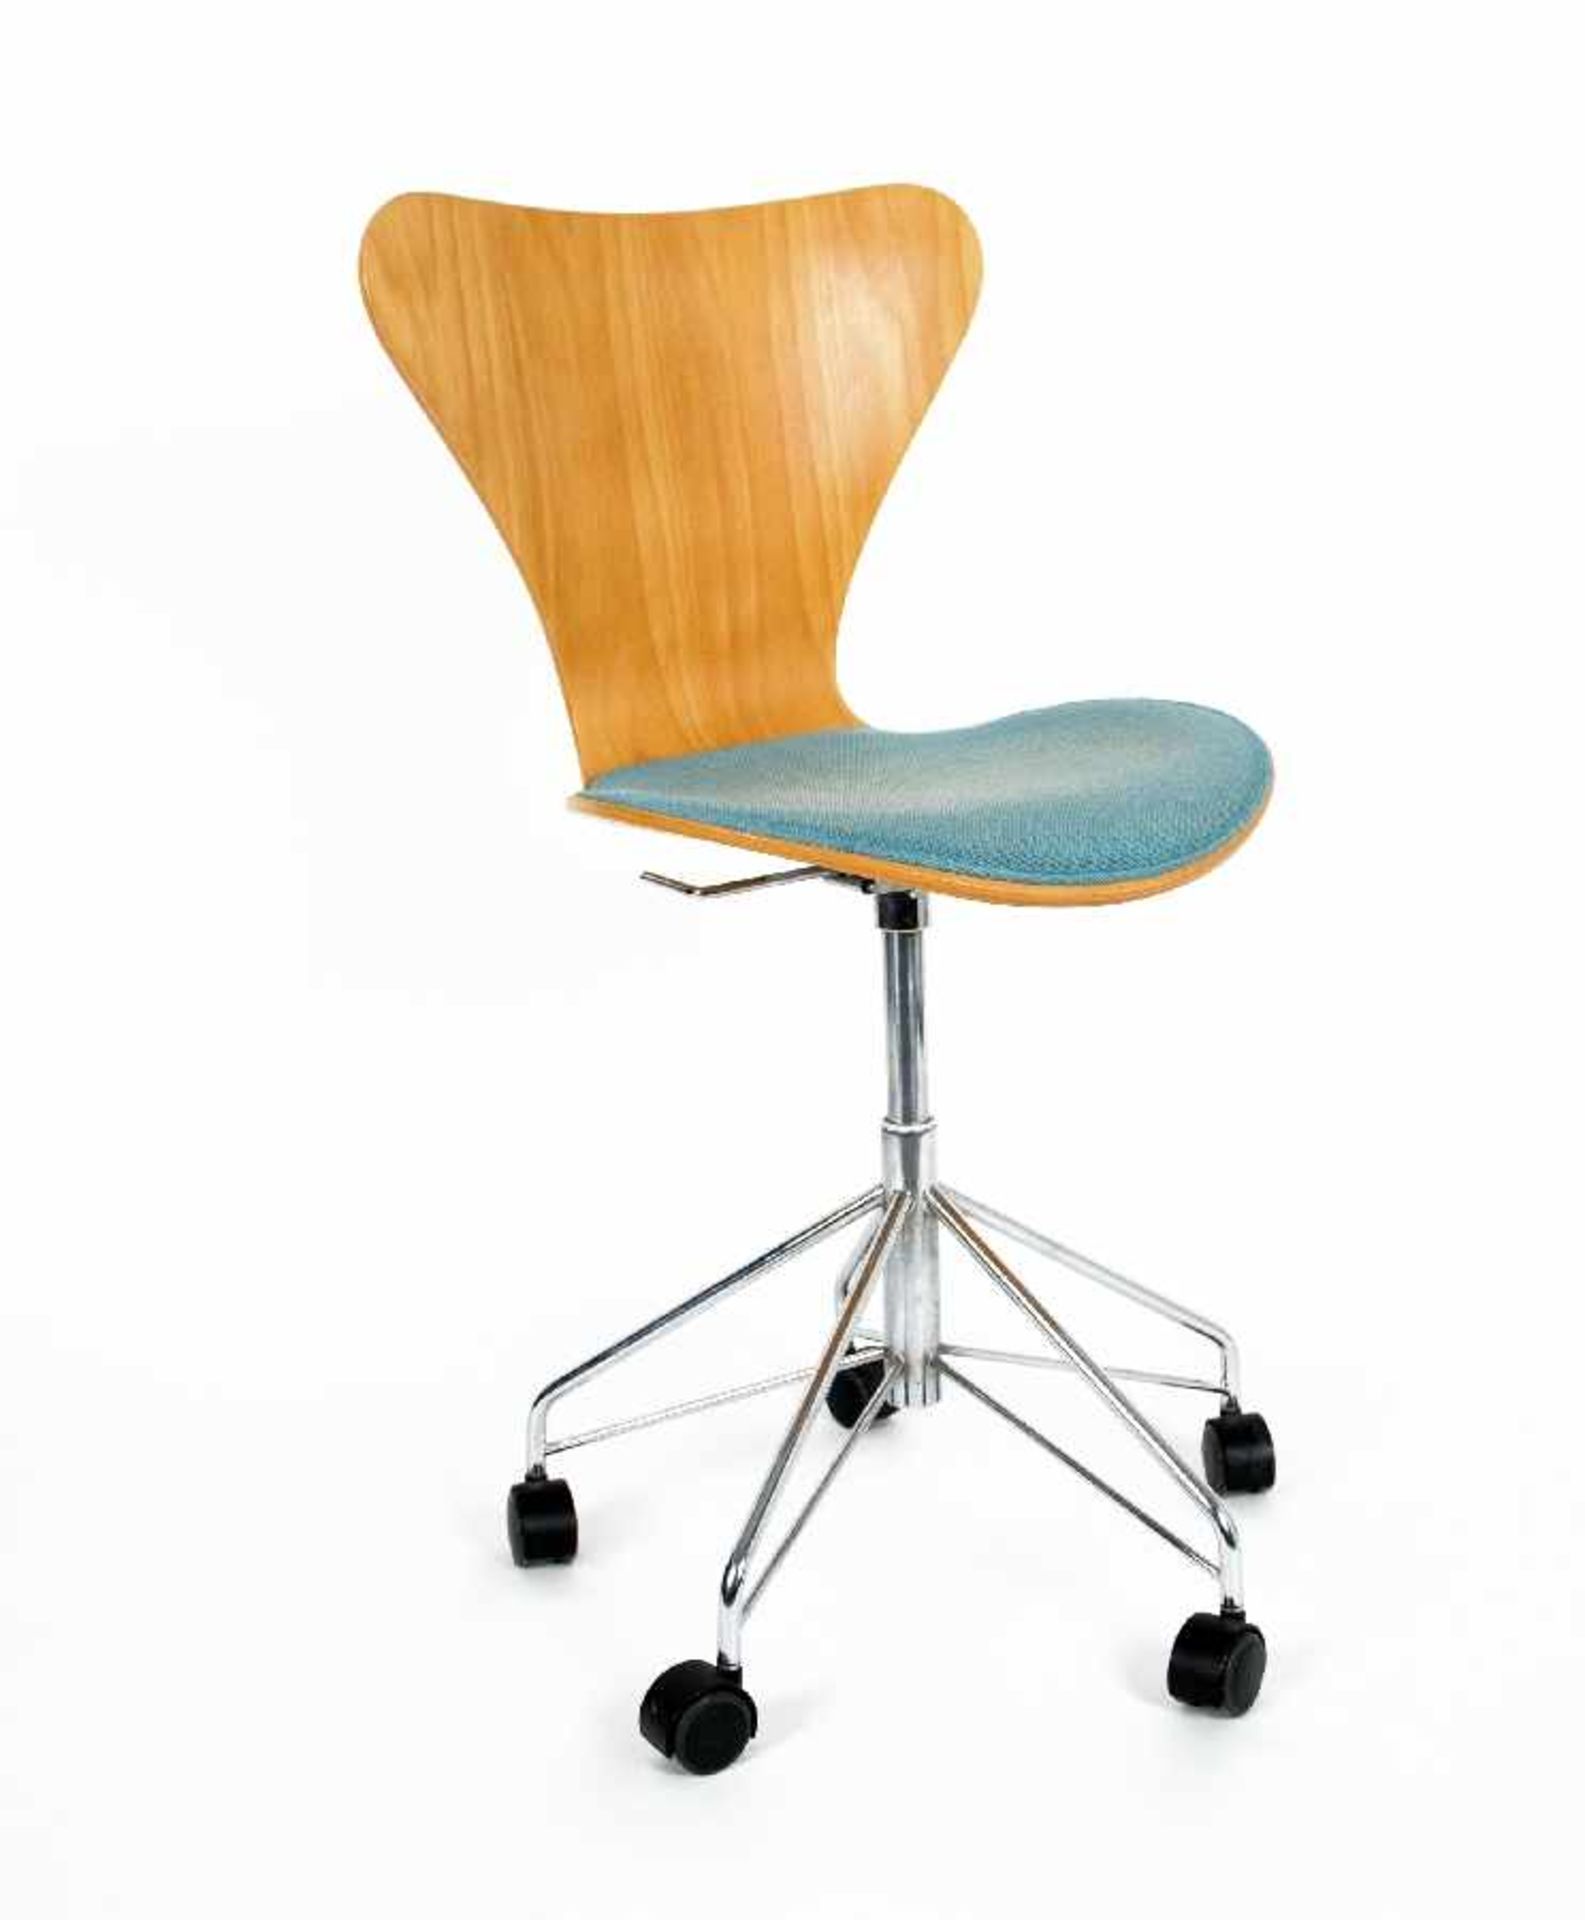 Arne Jacobsen1902 - 1971Office chair 3117Stahl, verchromt, Buchenholz, Quadradstoff, 1955; H 85